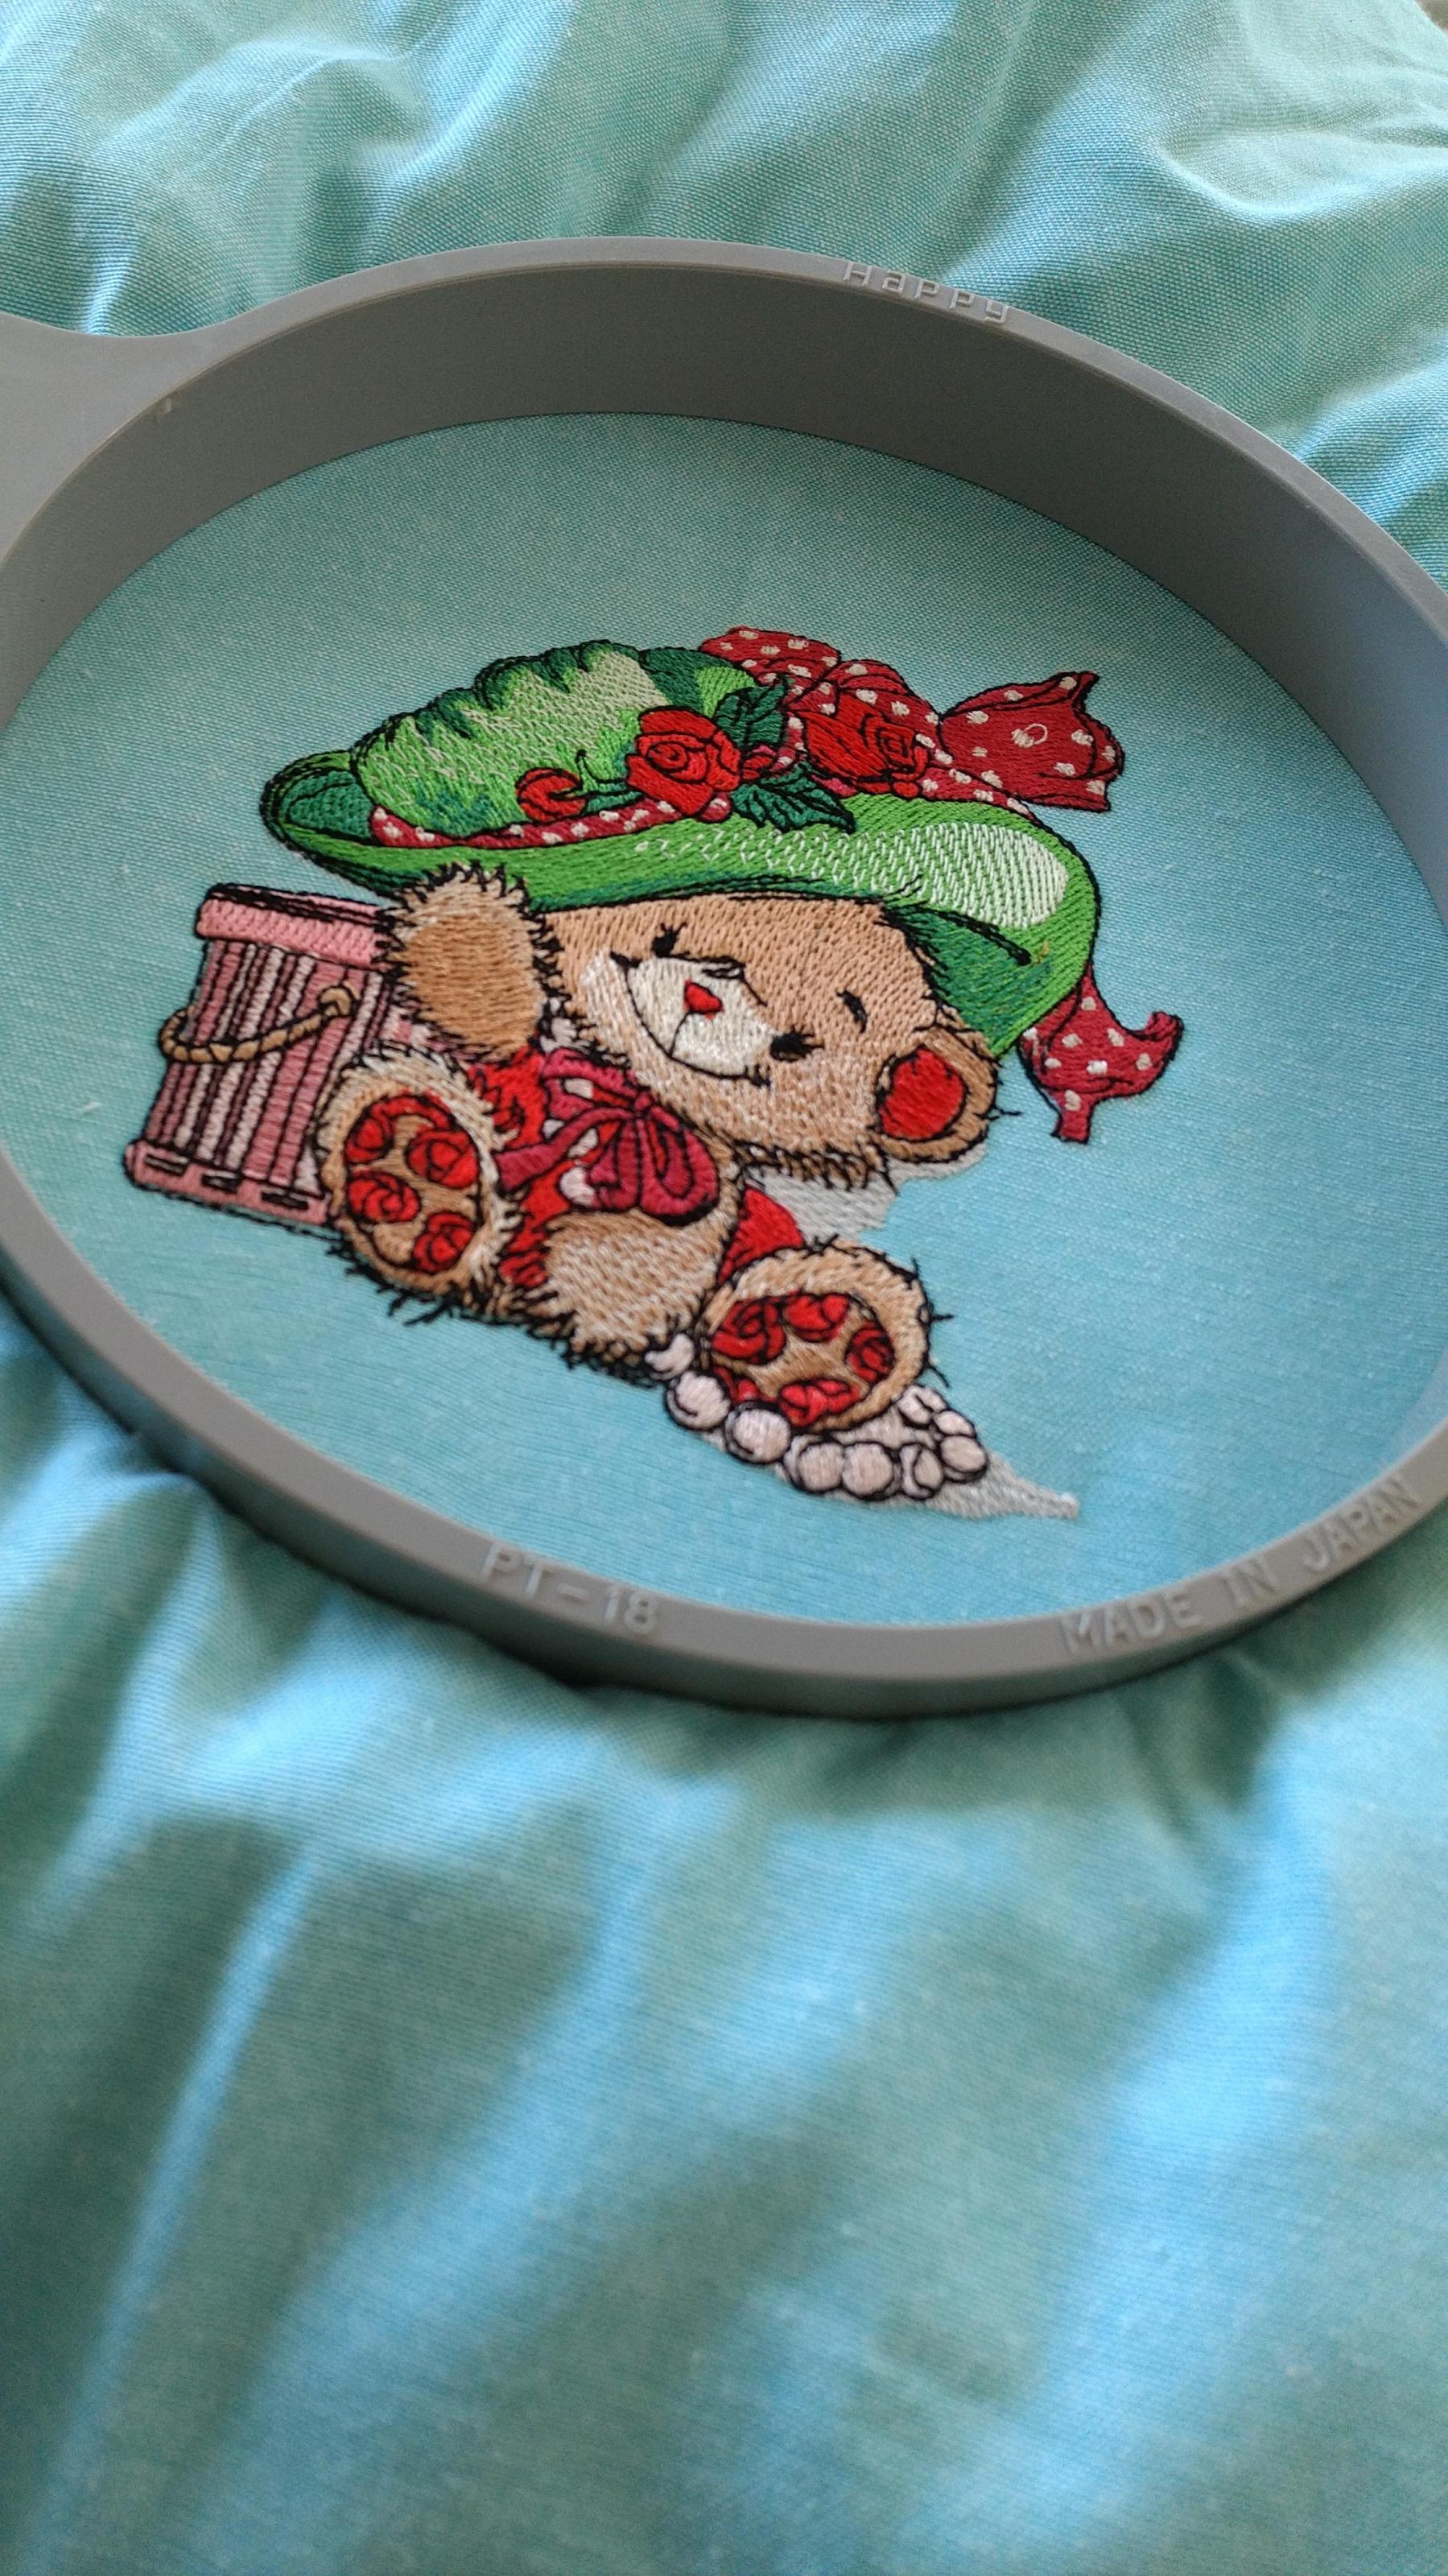 Teddy Bear fashion machine embroidery design in hoop